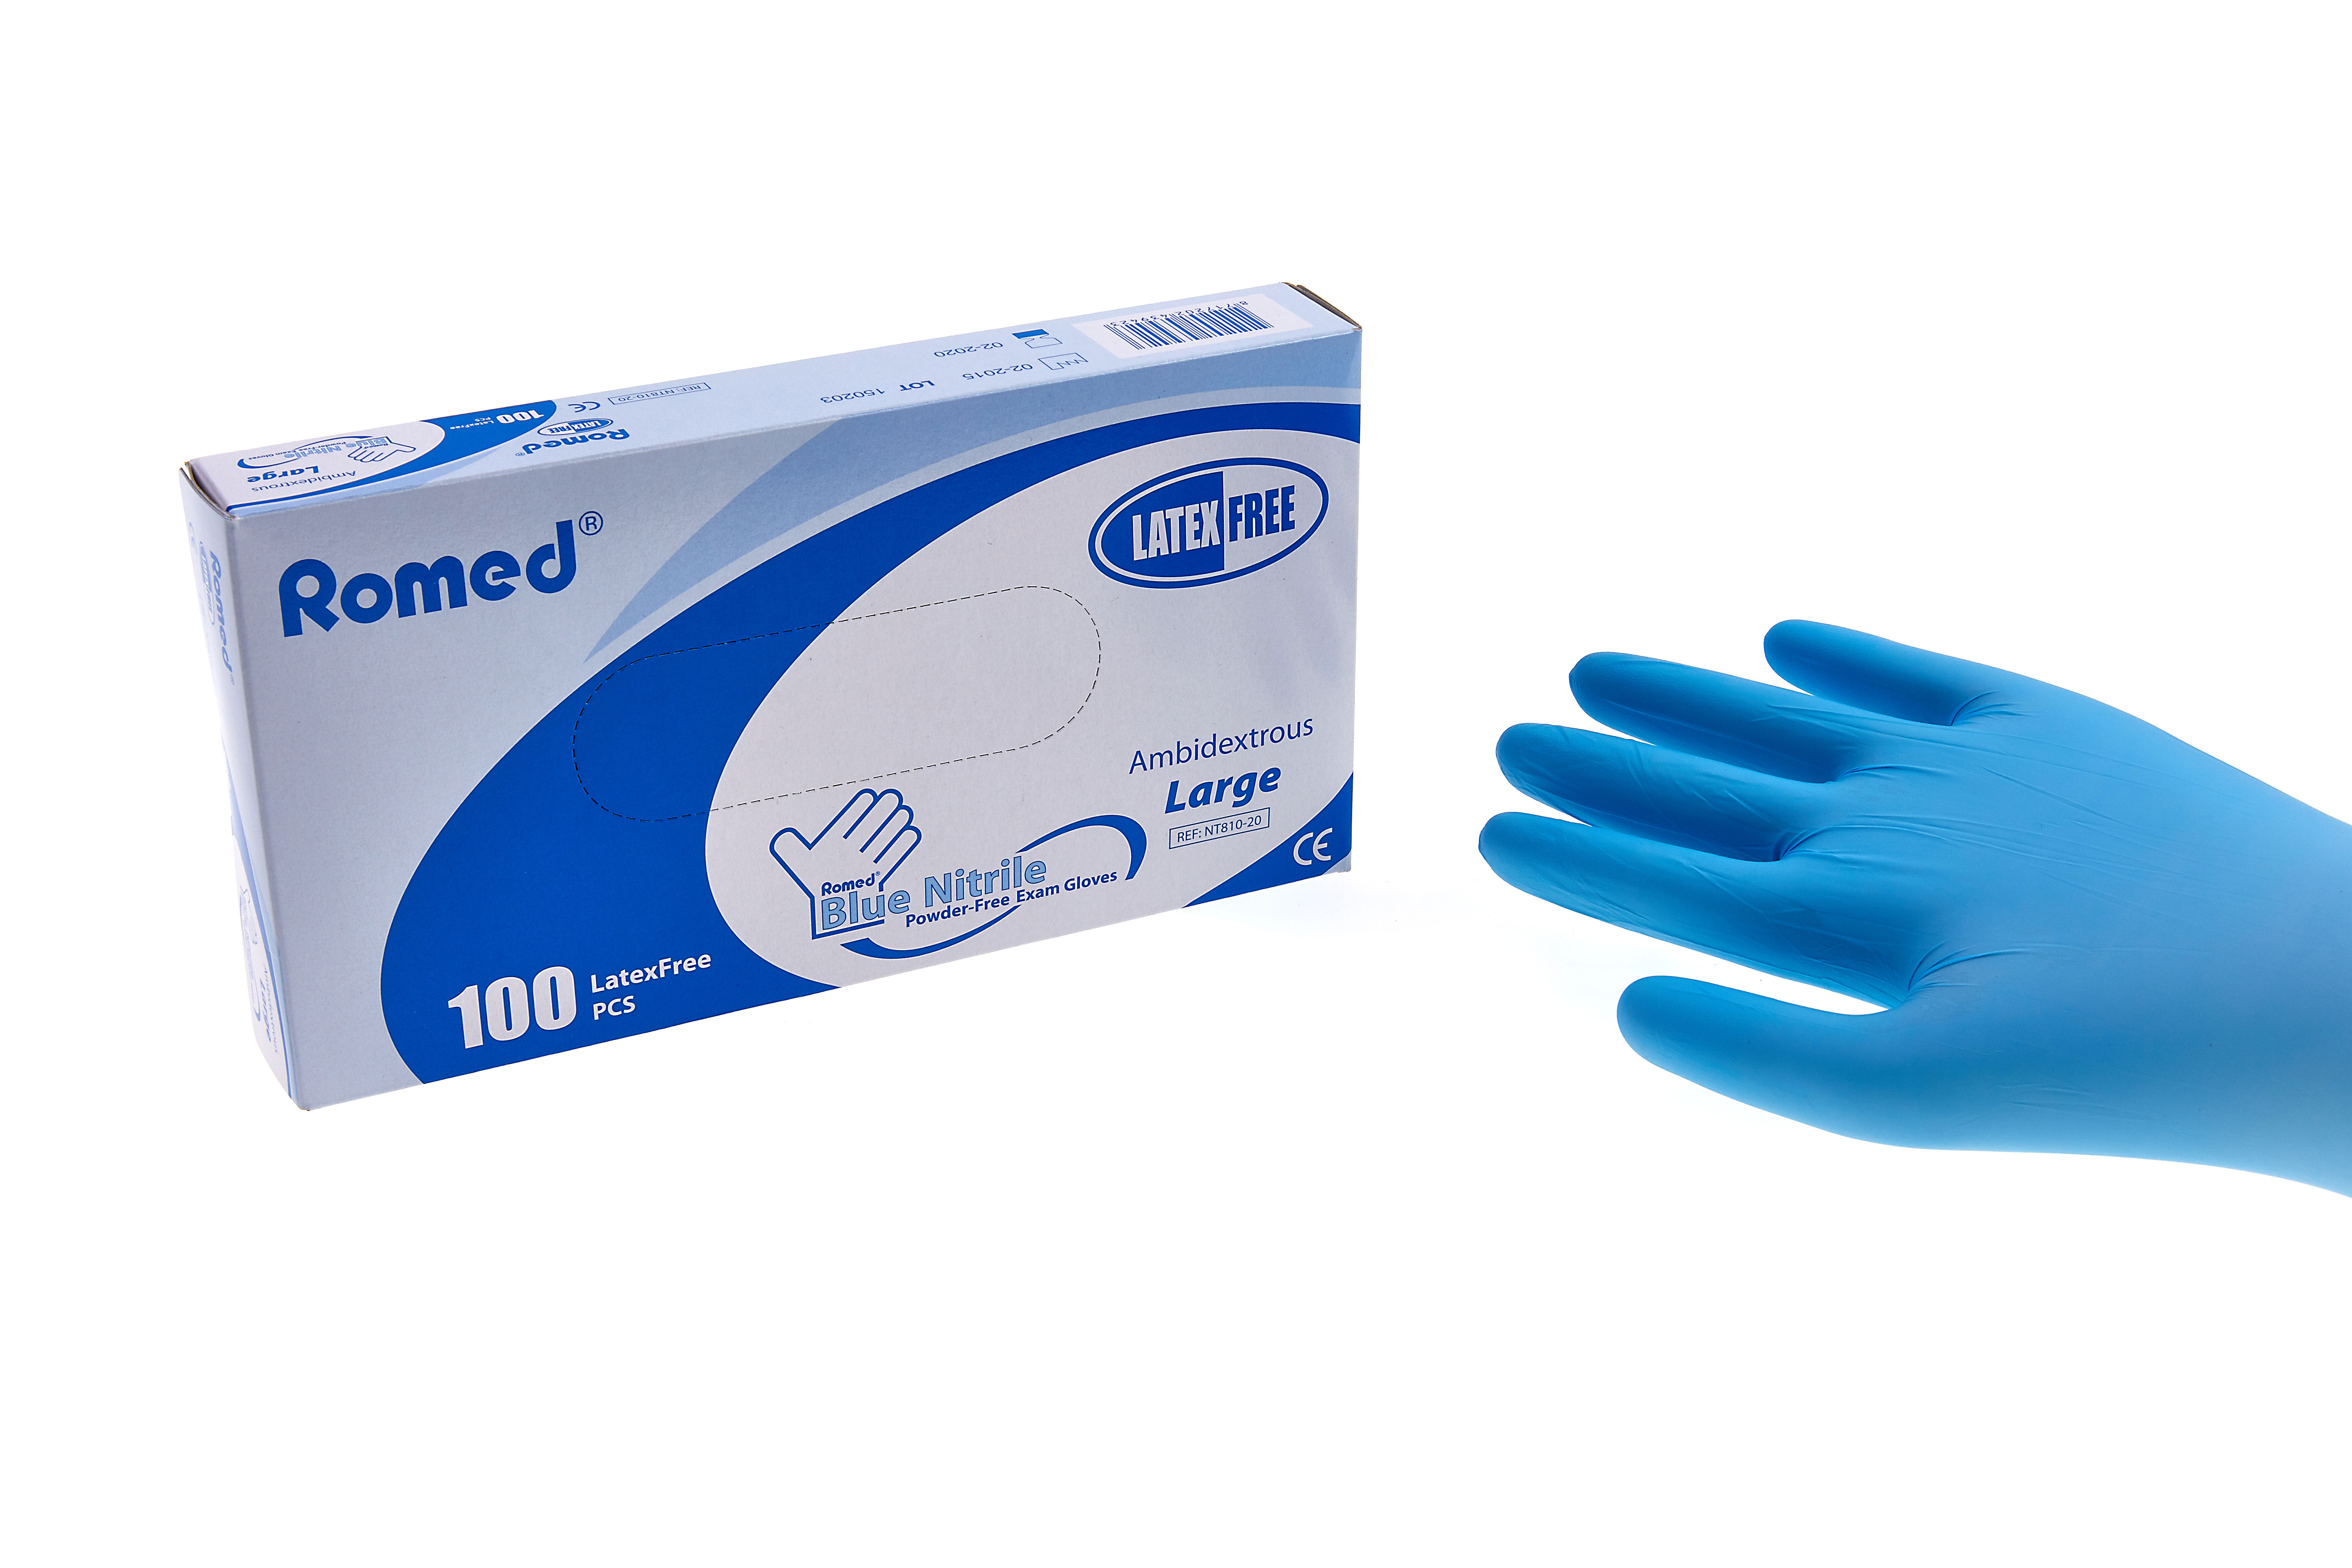 NT805-20 Romed nitrile examination gloves, non sterile, powderfree, blue, medium, per 100 pcs in a dispenser box, 20 x 100 pcs = 2.000 pcs in a carton.